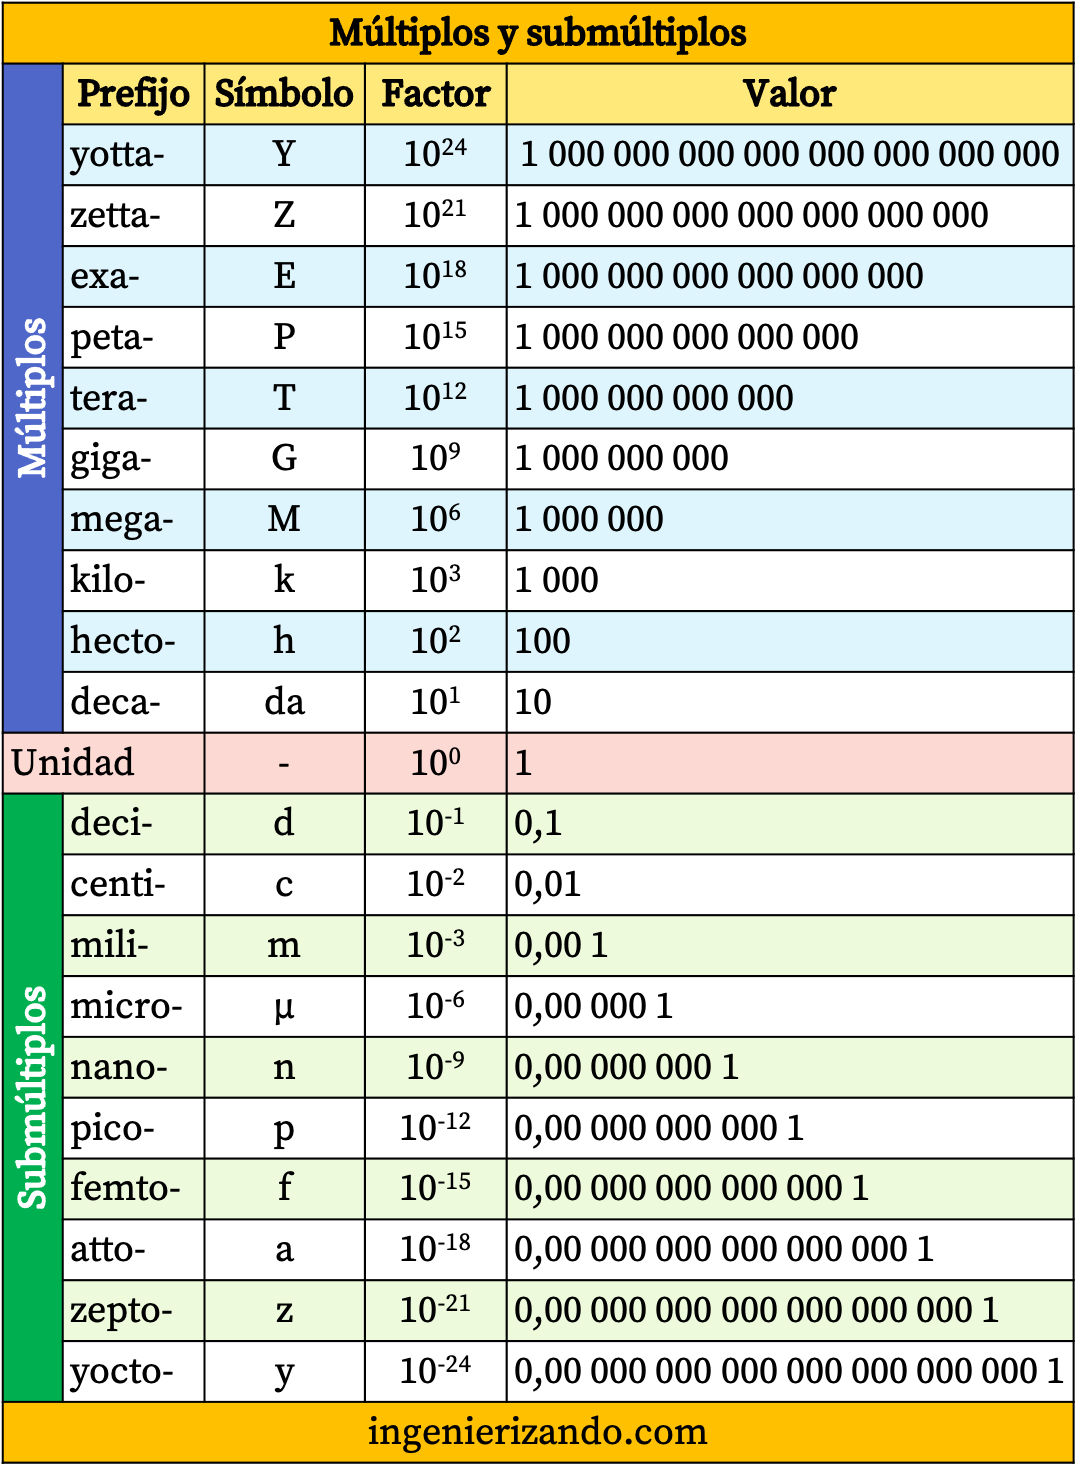 tabella dei multipli e sottomultipli